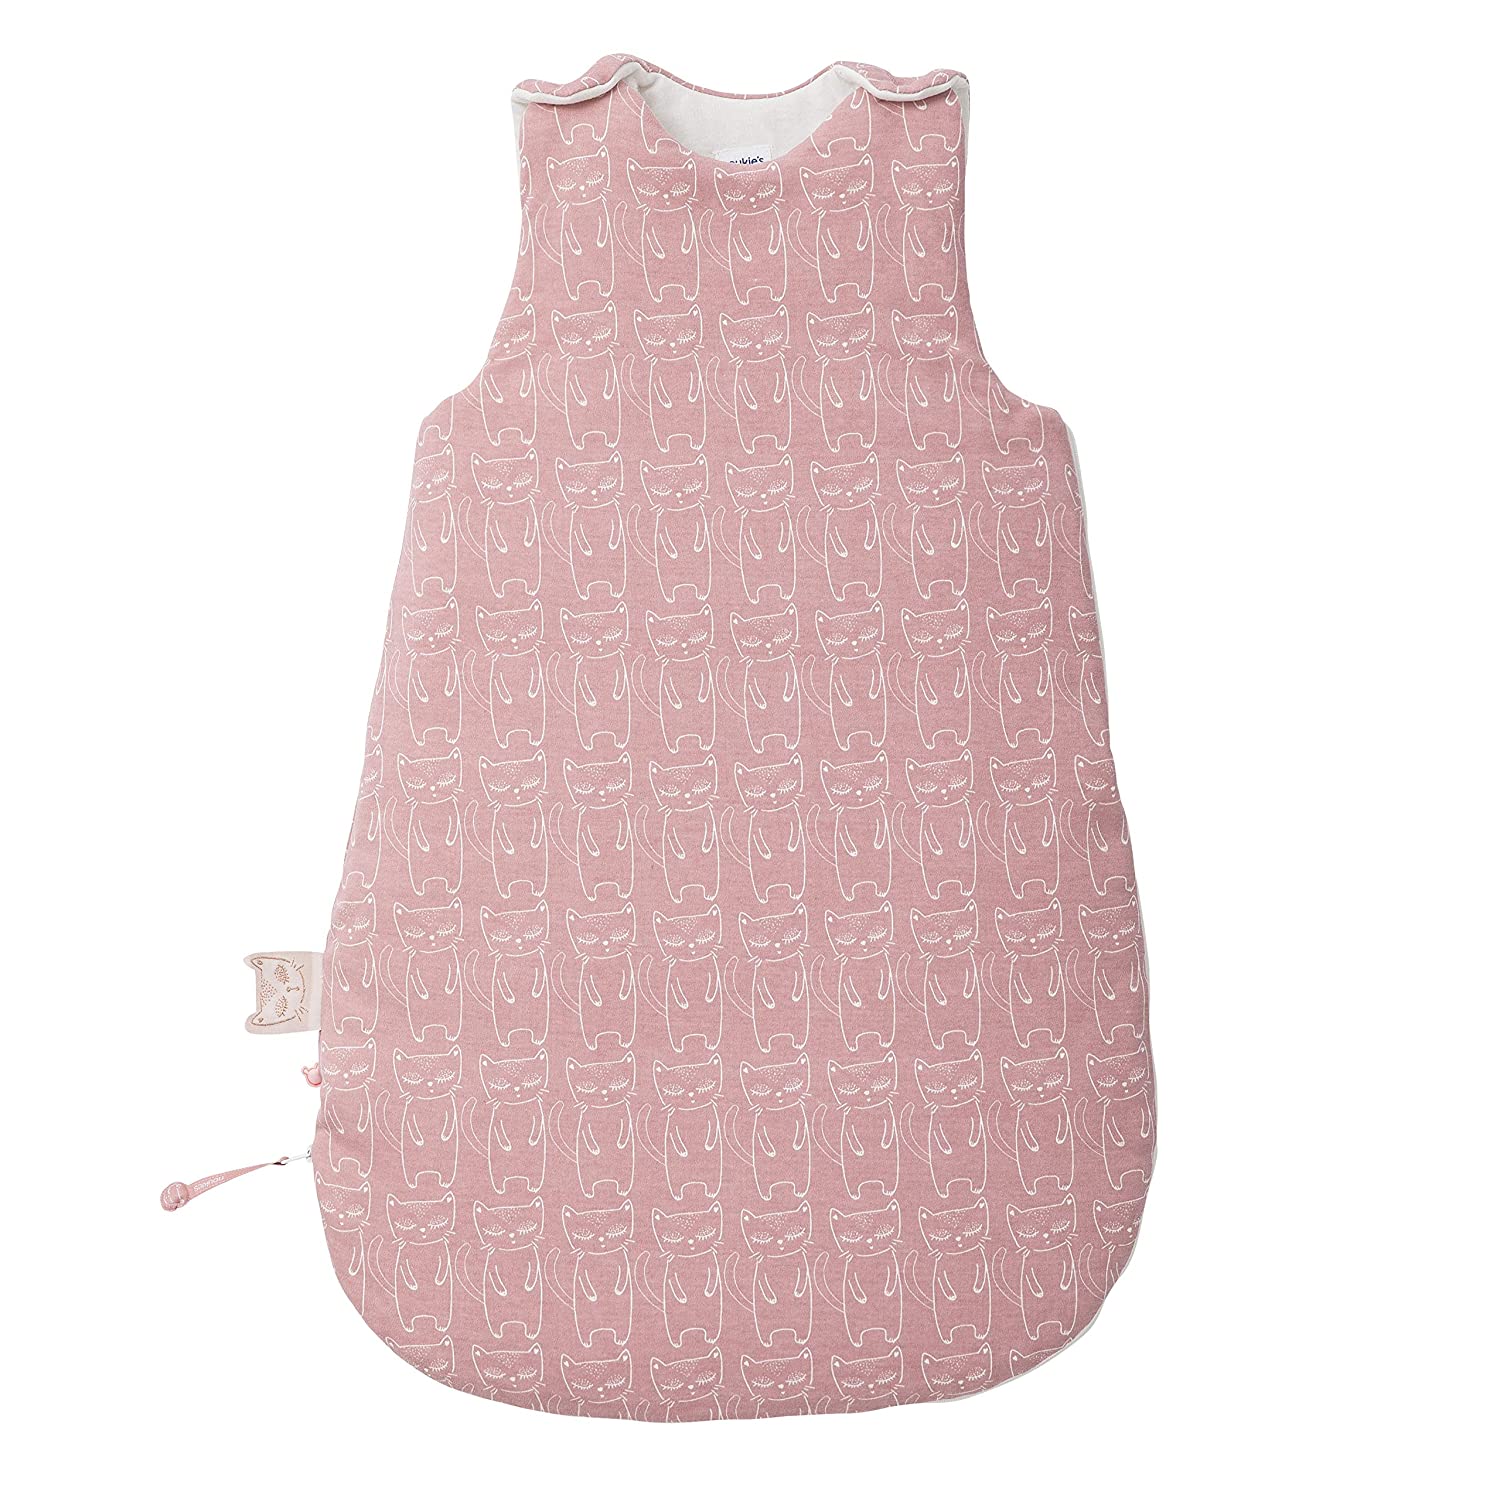 Noukies BB1860.61 Imagine Jersey Sleeping Bag 70 cm Pink